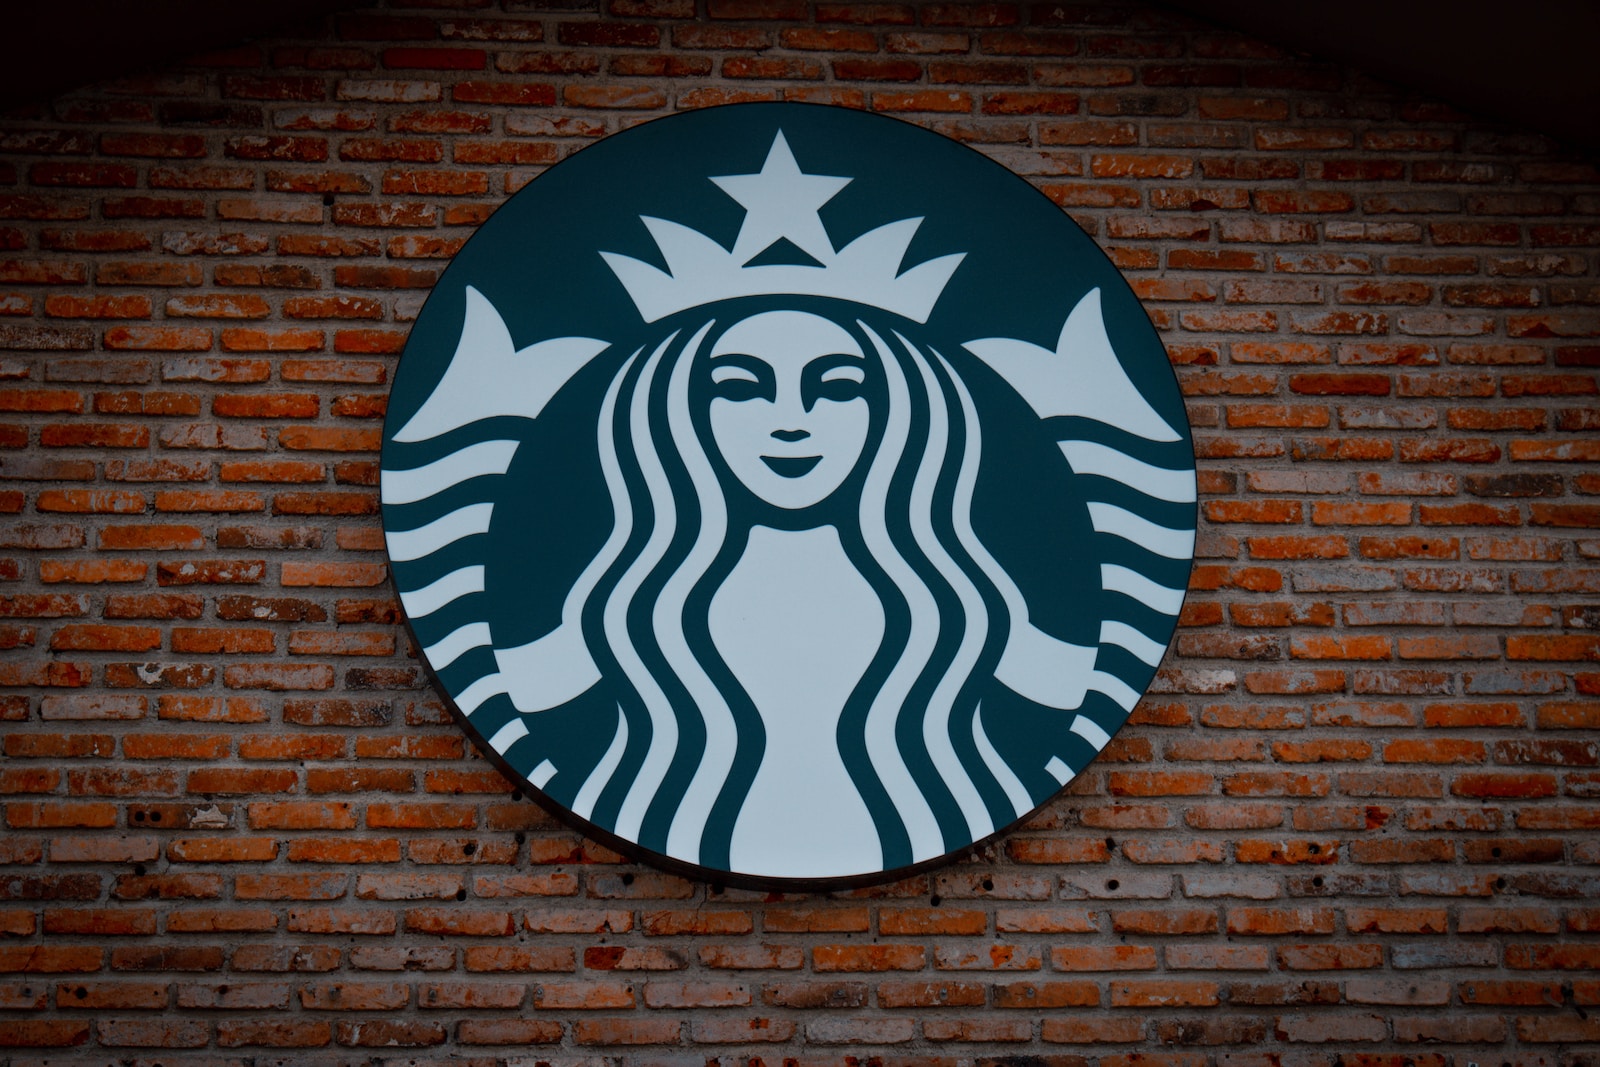 Starbucks logo signage on brown brick wall